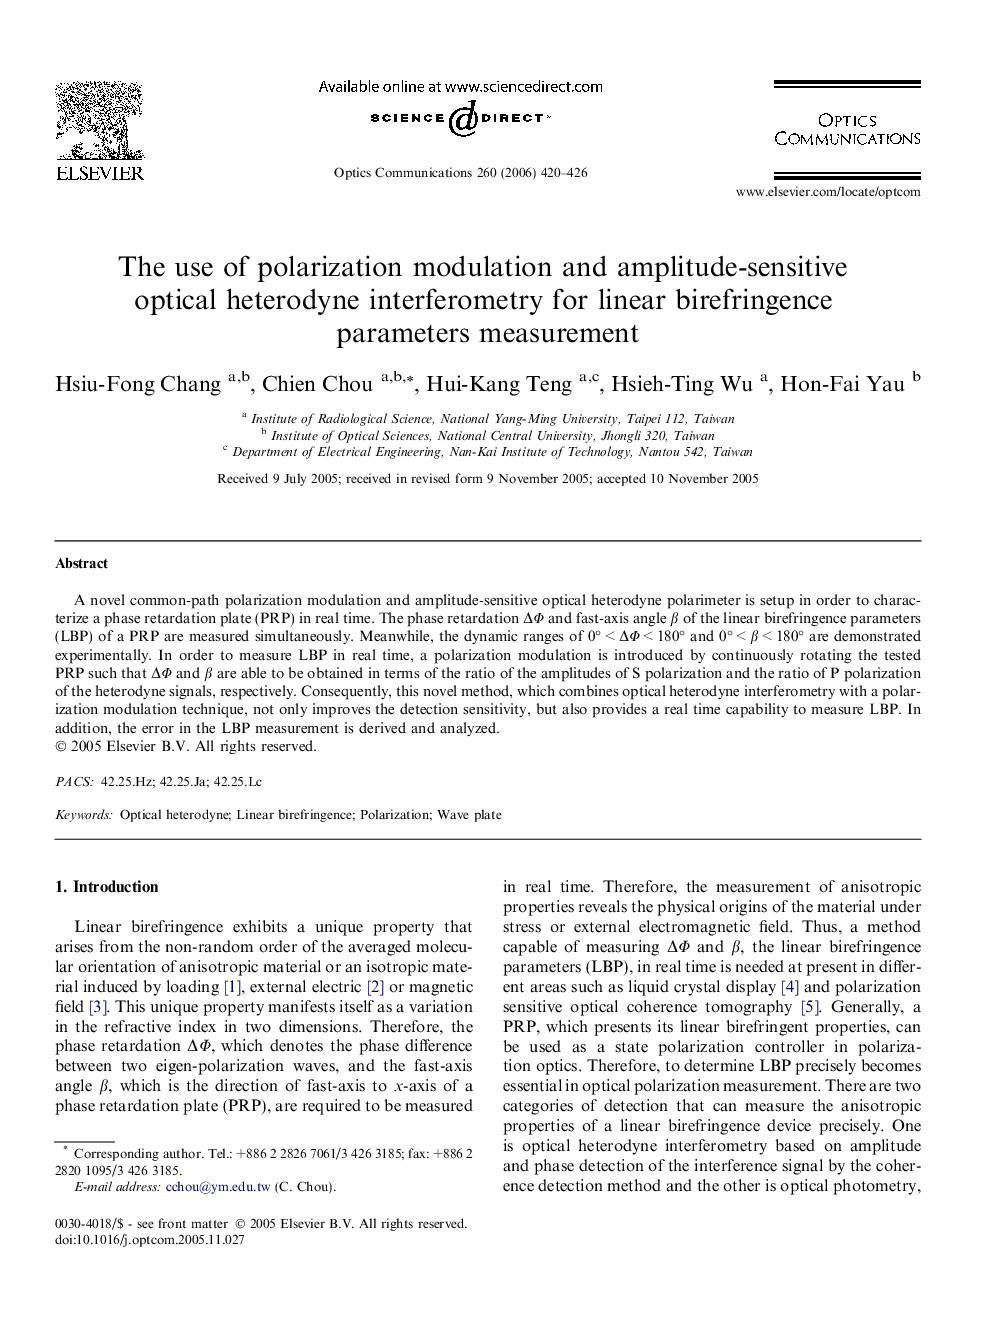 The use of polarization modulation and amplitude-sensitive optical heterodyne interferometry for linear birefringence parameters measurement